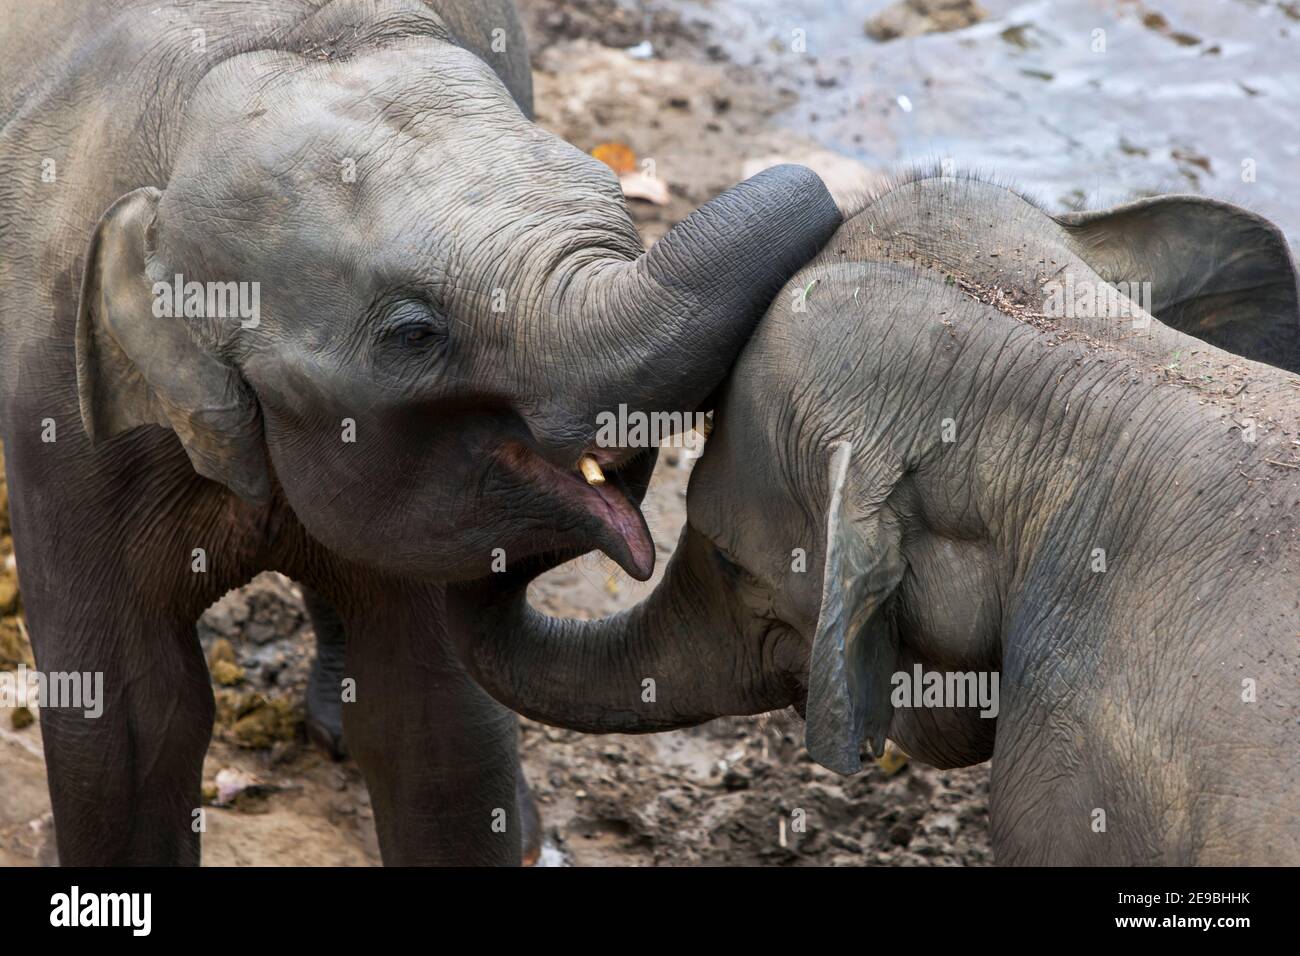 Young elephants from the Pinnawala Elephant Orphanage play on the bank of the Maha Oya River in central Sri Lanka. Stock Photo